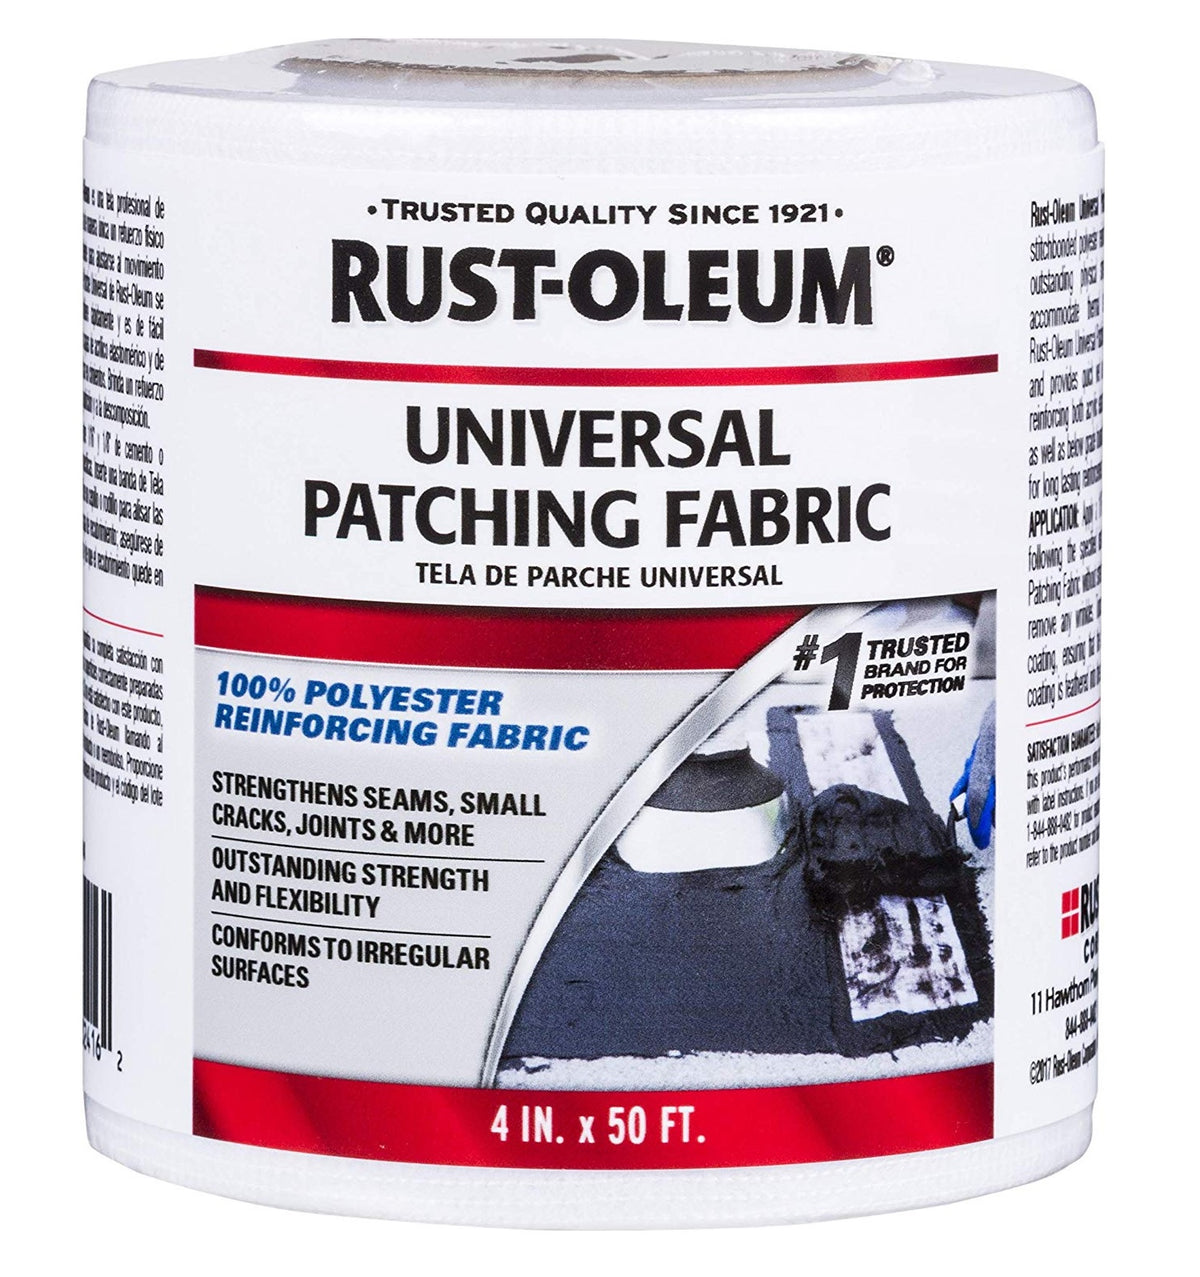 Rust-Oleum 301948 Universal Patching Fabric, White